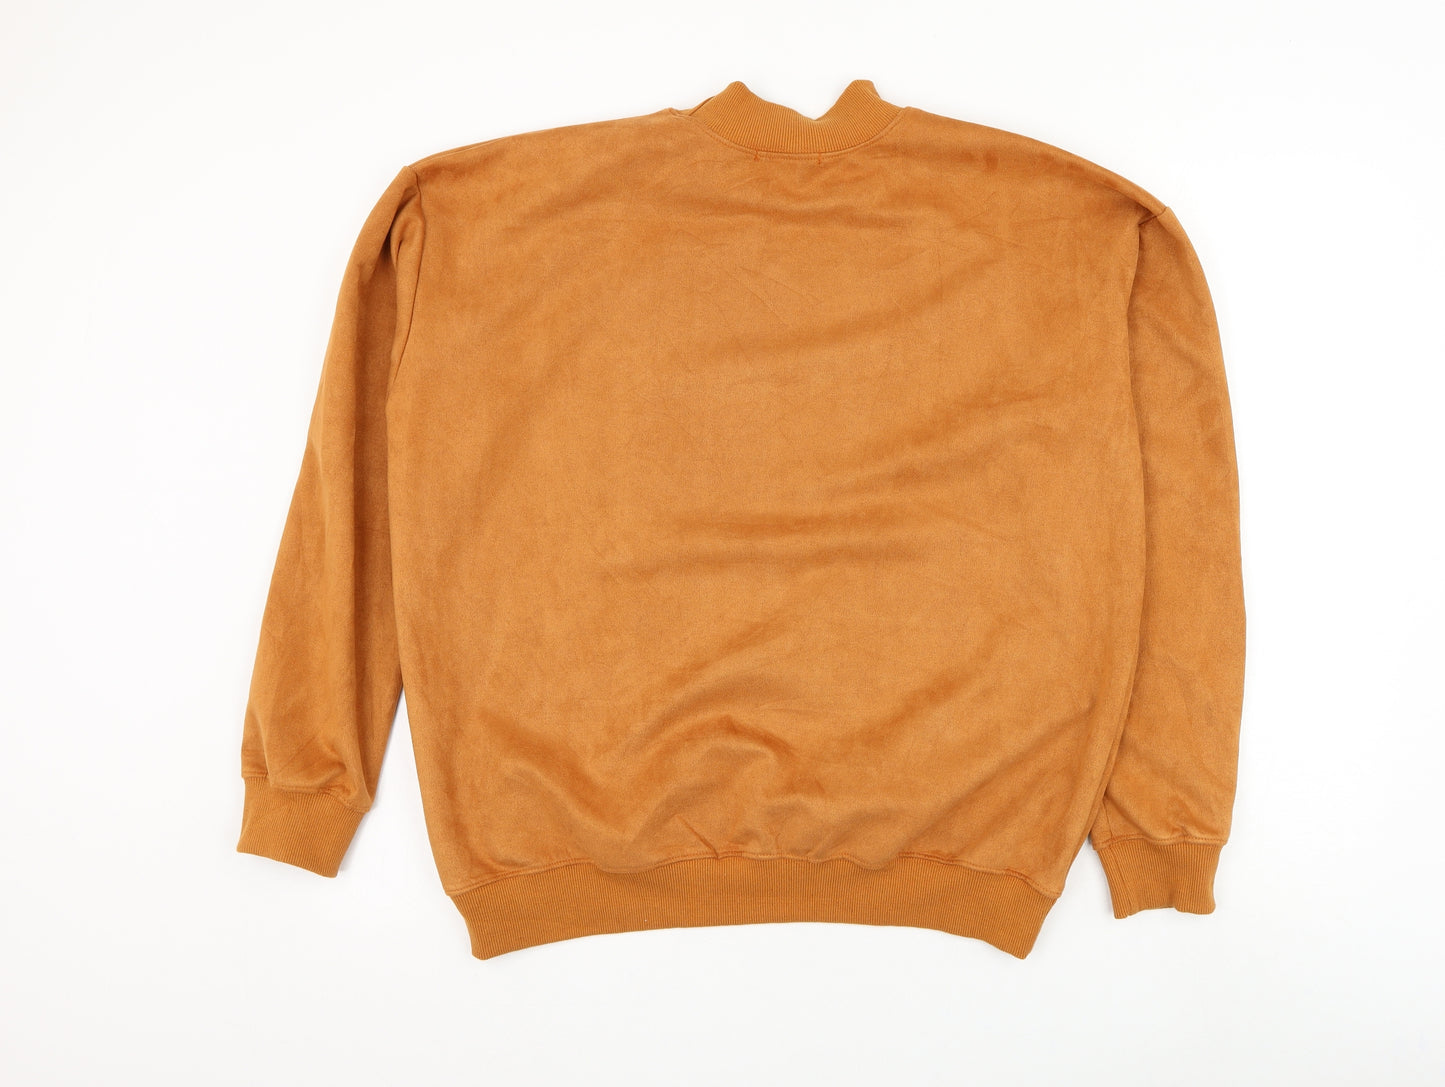 Zaful Womens Orange Polyester Pullover Sweatshirt Size 12 Pullover